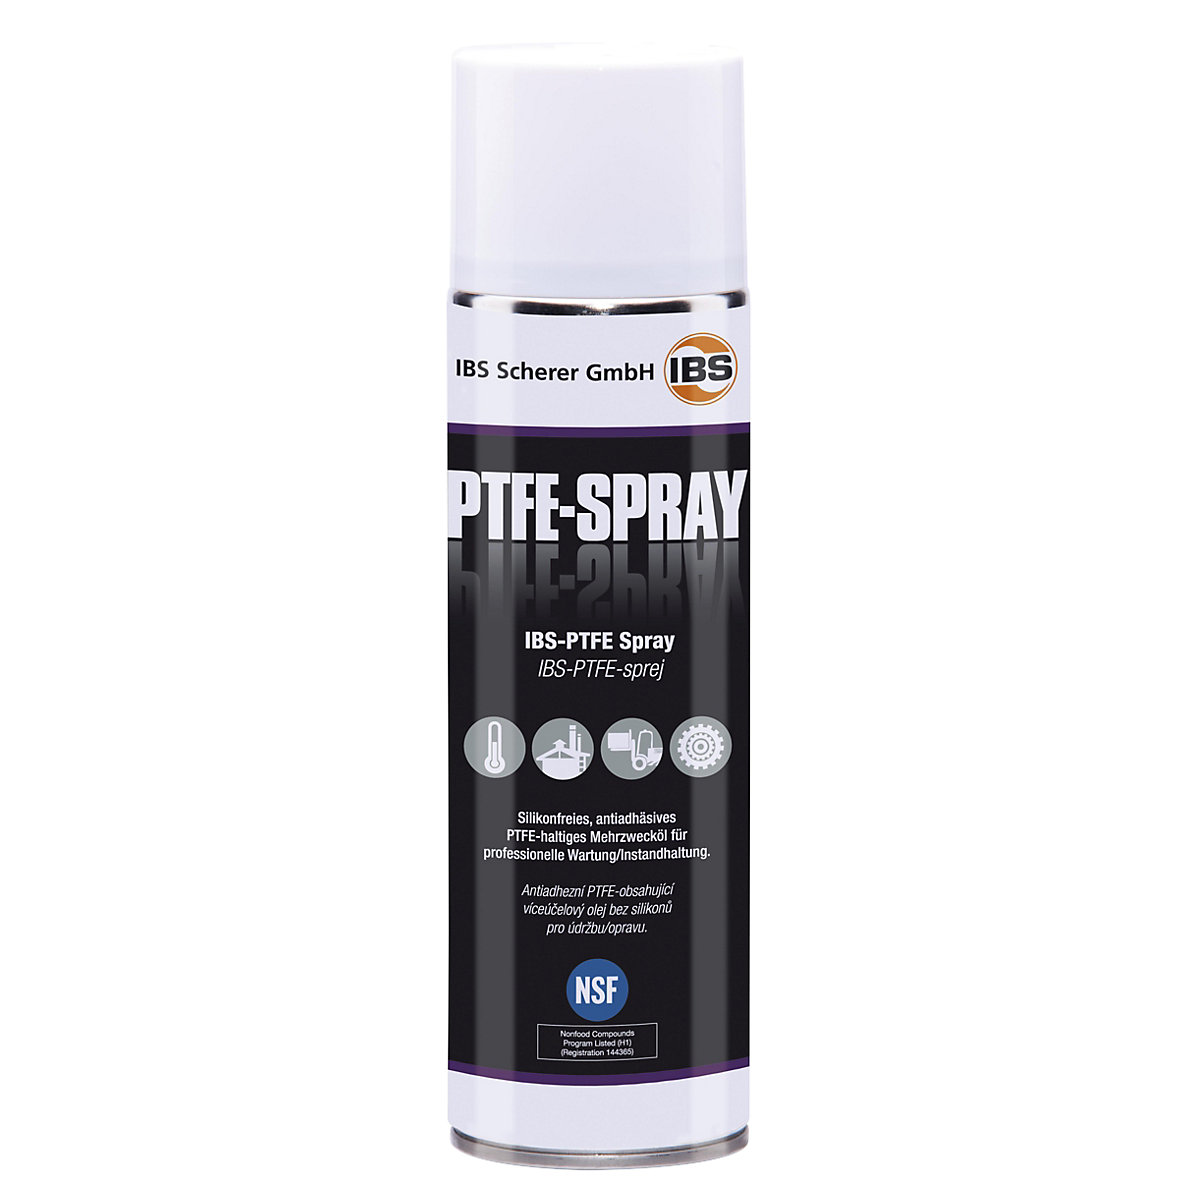 Multifunctionele olie, PTFE-spray – IBS Scherer